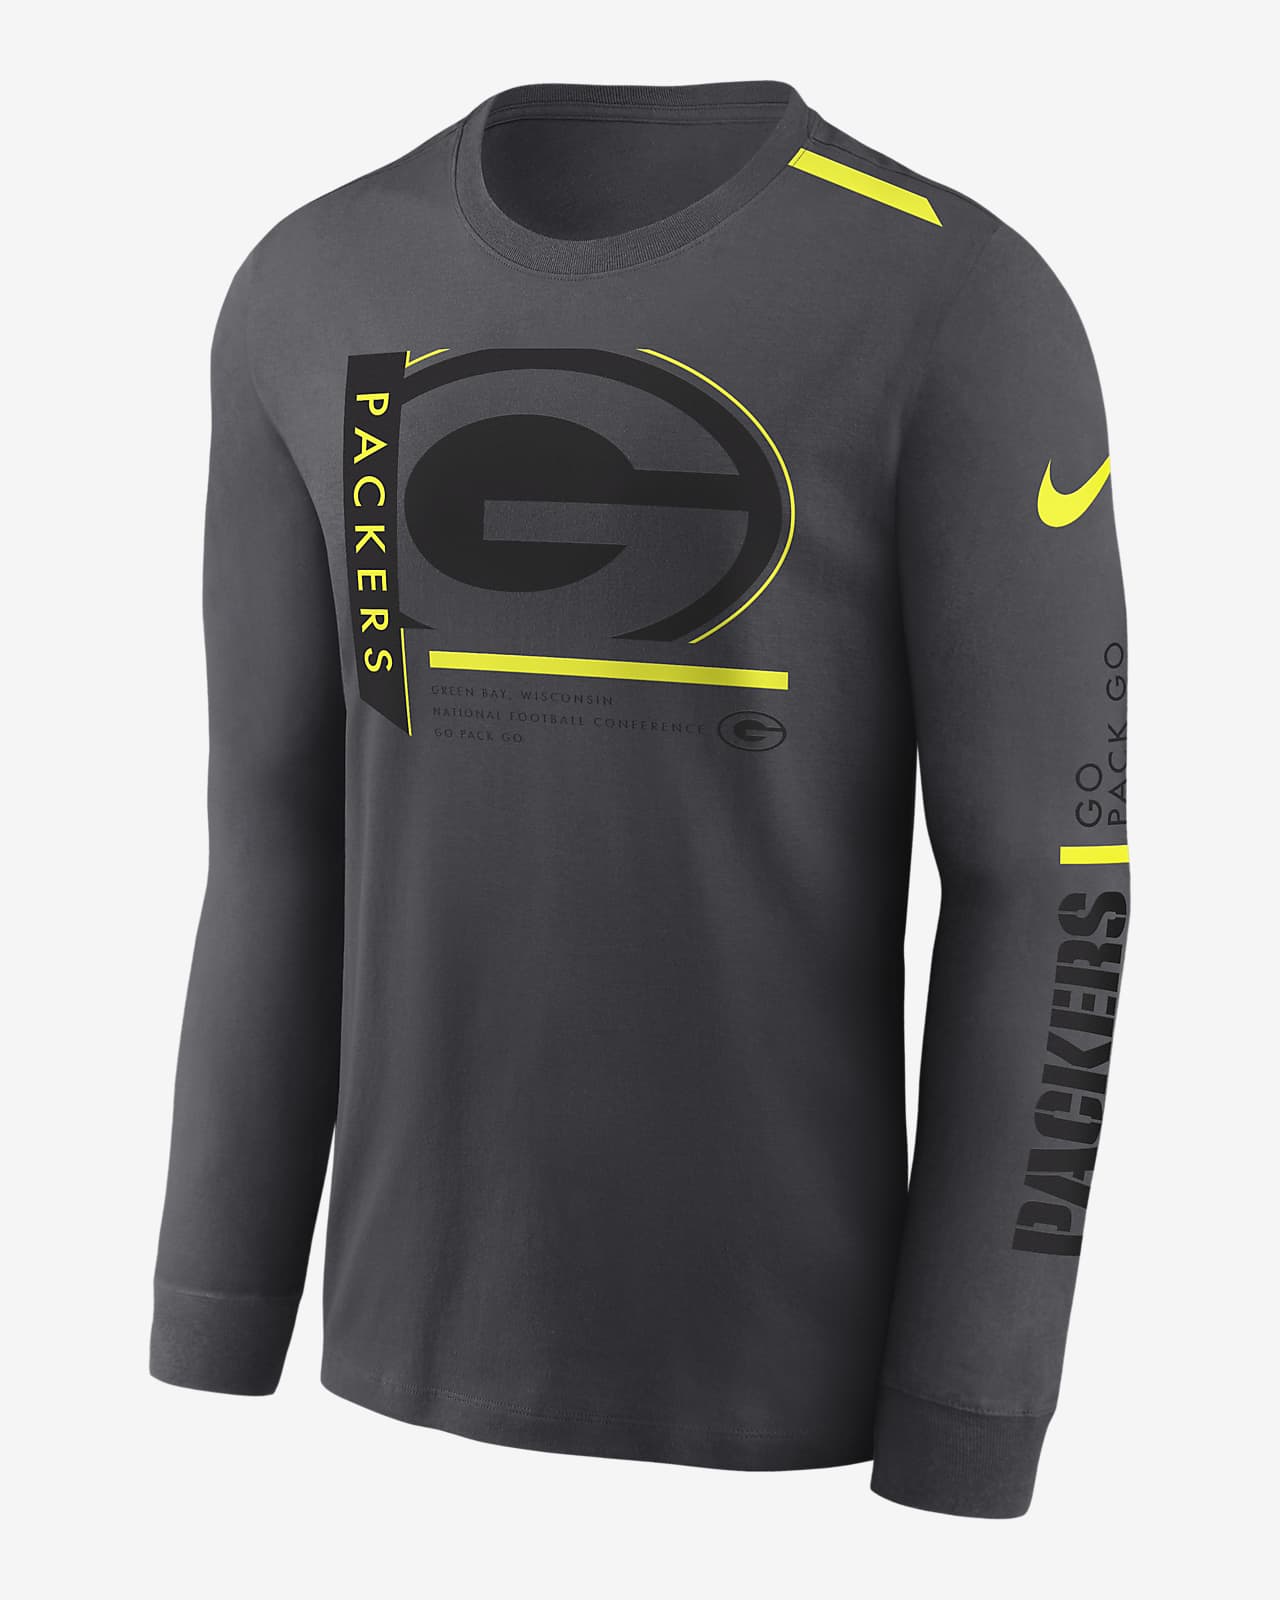 Green Bay Packers Volt Men's Nike Dri-FIT NFL Long-Sleeve T-Shirt.